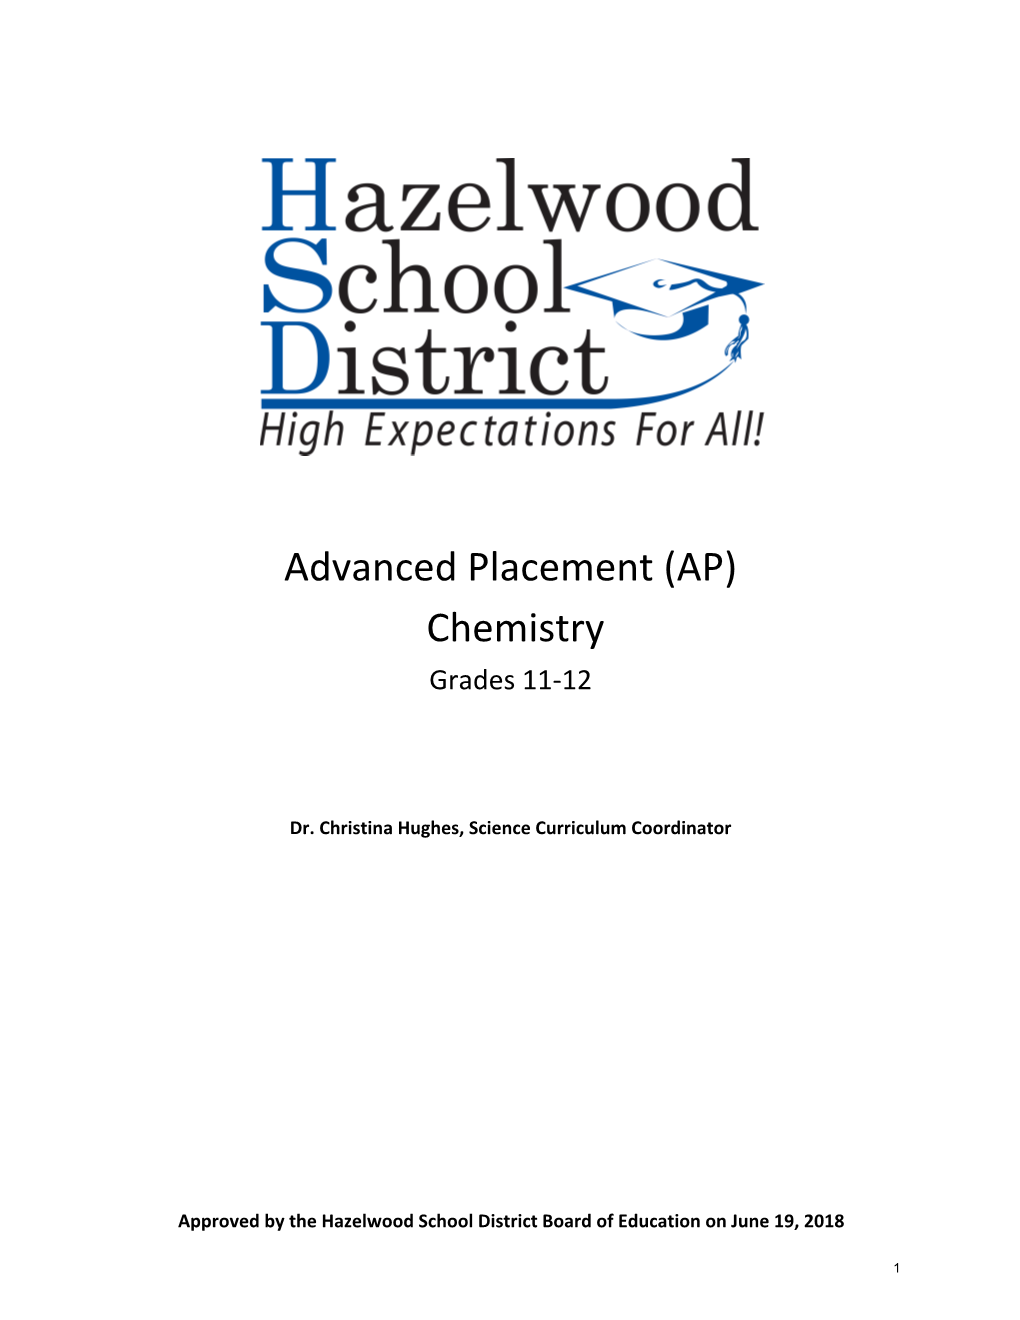 (AP) Chemistry Grades 11-12